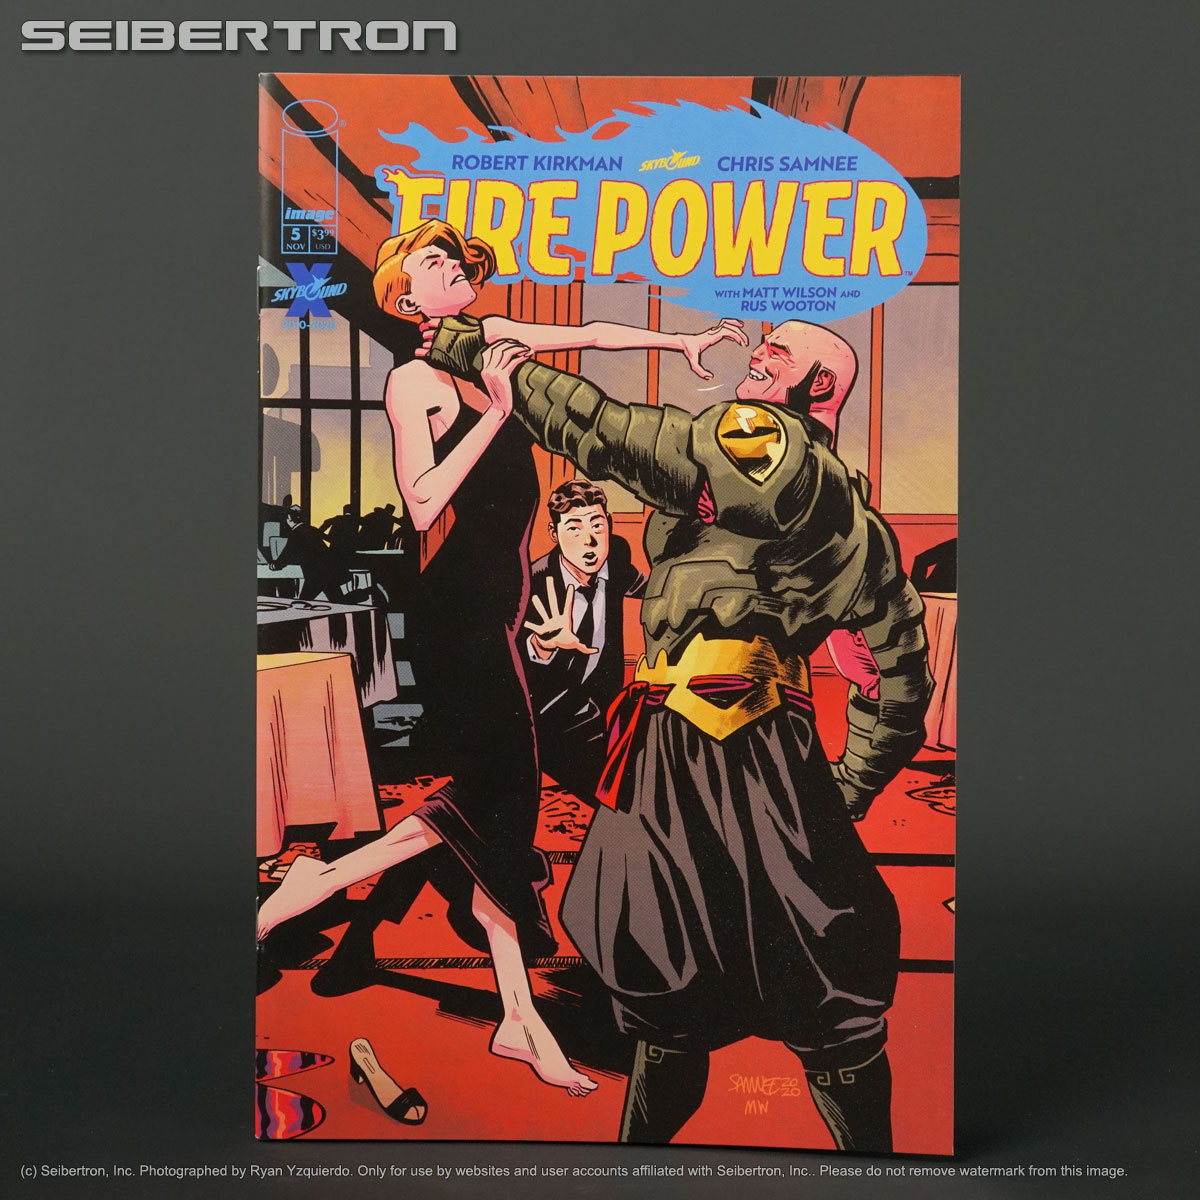 FIRE POWER #5 Image Comics 2020 SEP200205 (W) Kirkman (A/CA) Samnee + Wilson